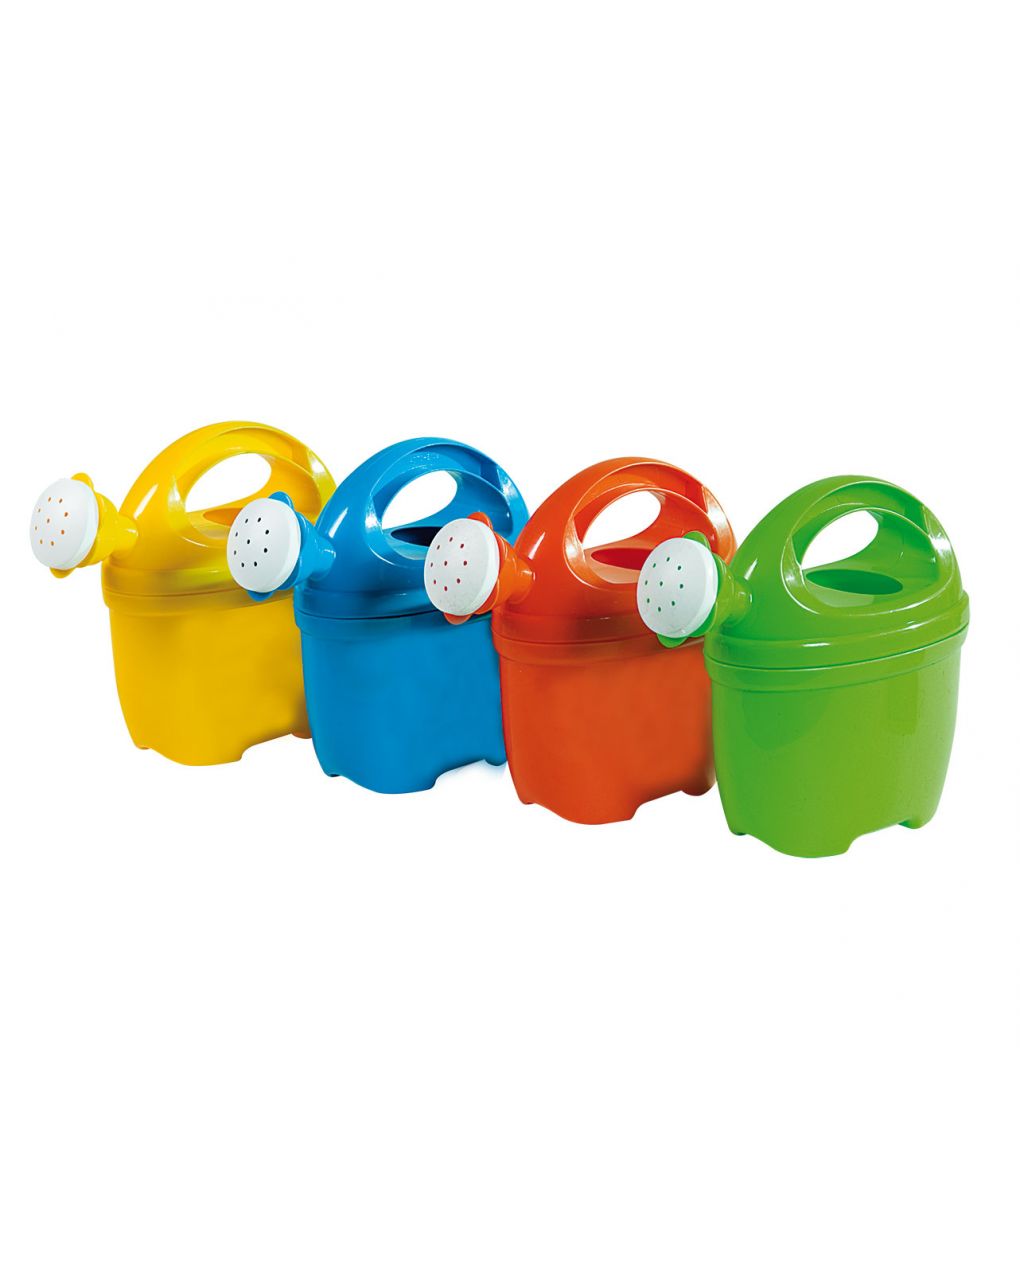 Bebedouro colorido para crianças - cores sortidas - androni toys - And